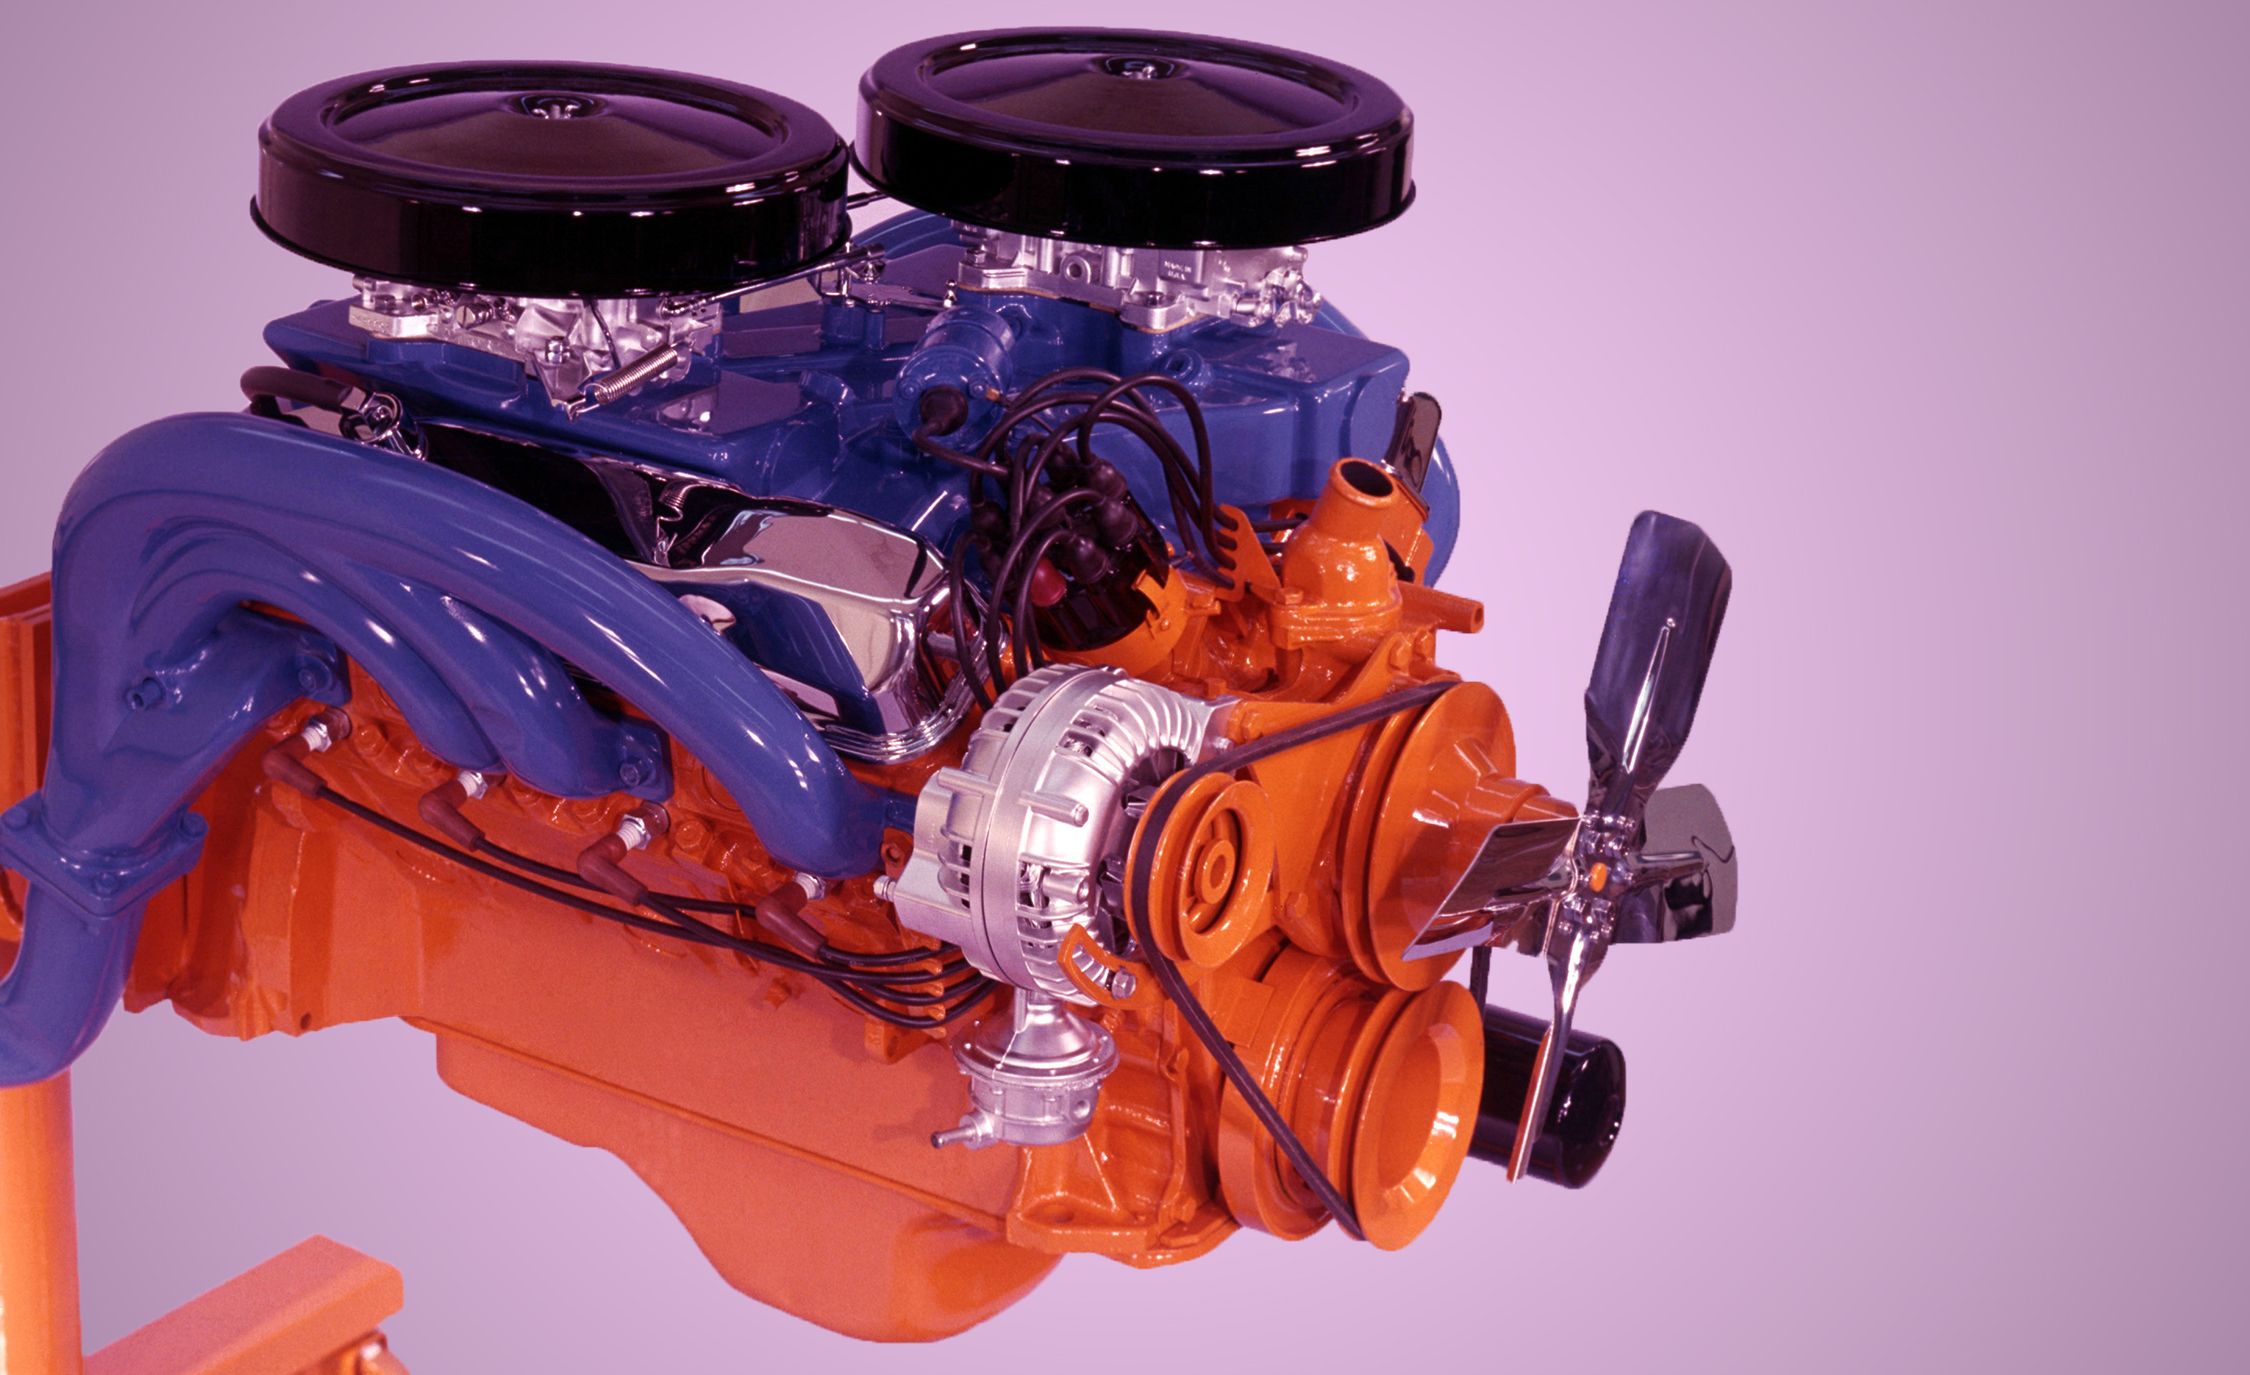 Details about MODEL ENGINE CLASSIC MOPAR 426 COMANDO V-8 1/25 SCALE WITH LO...